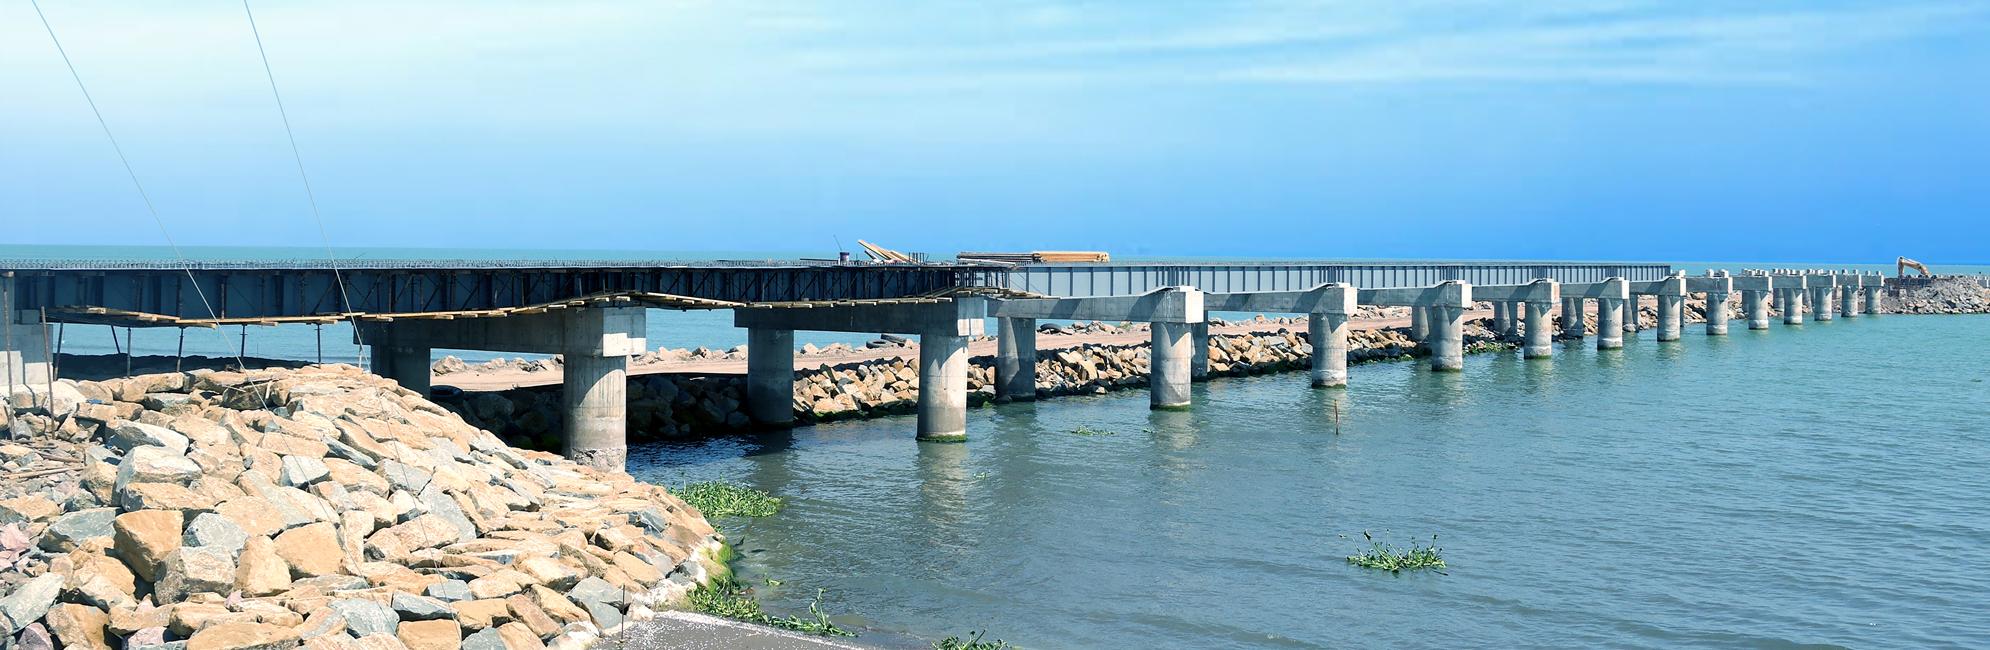 Design and construction of Chamkhaleh passenger port